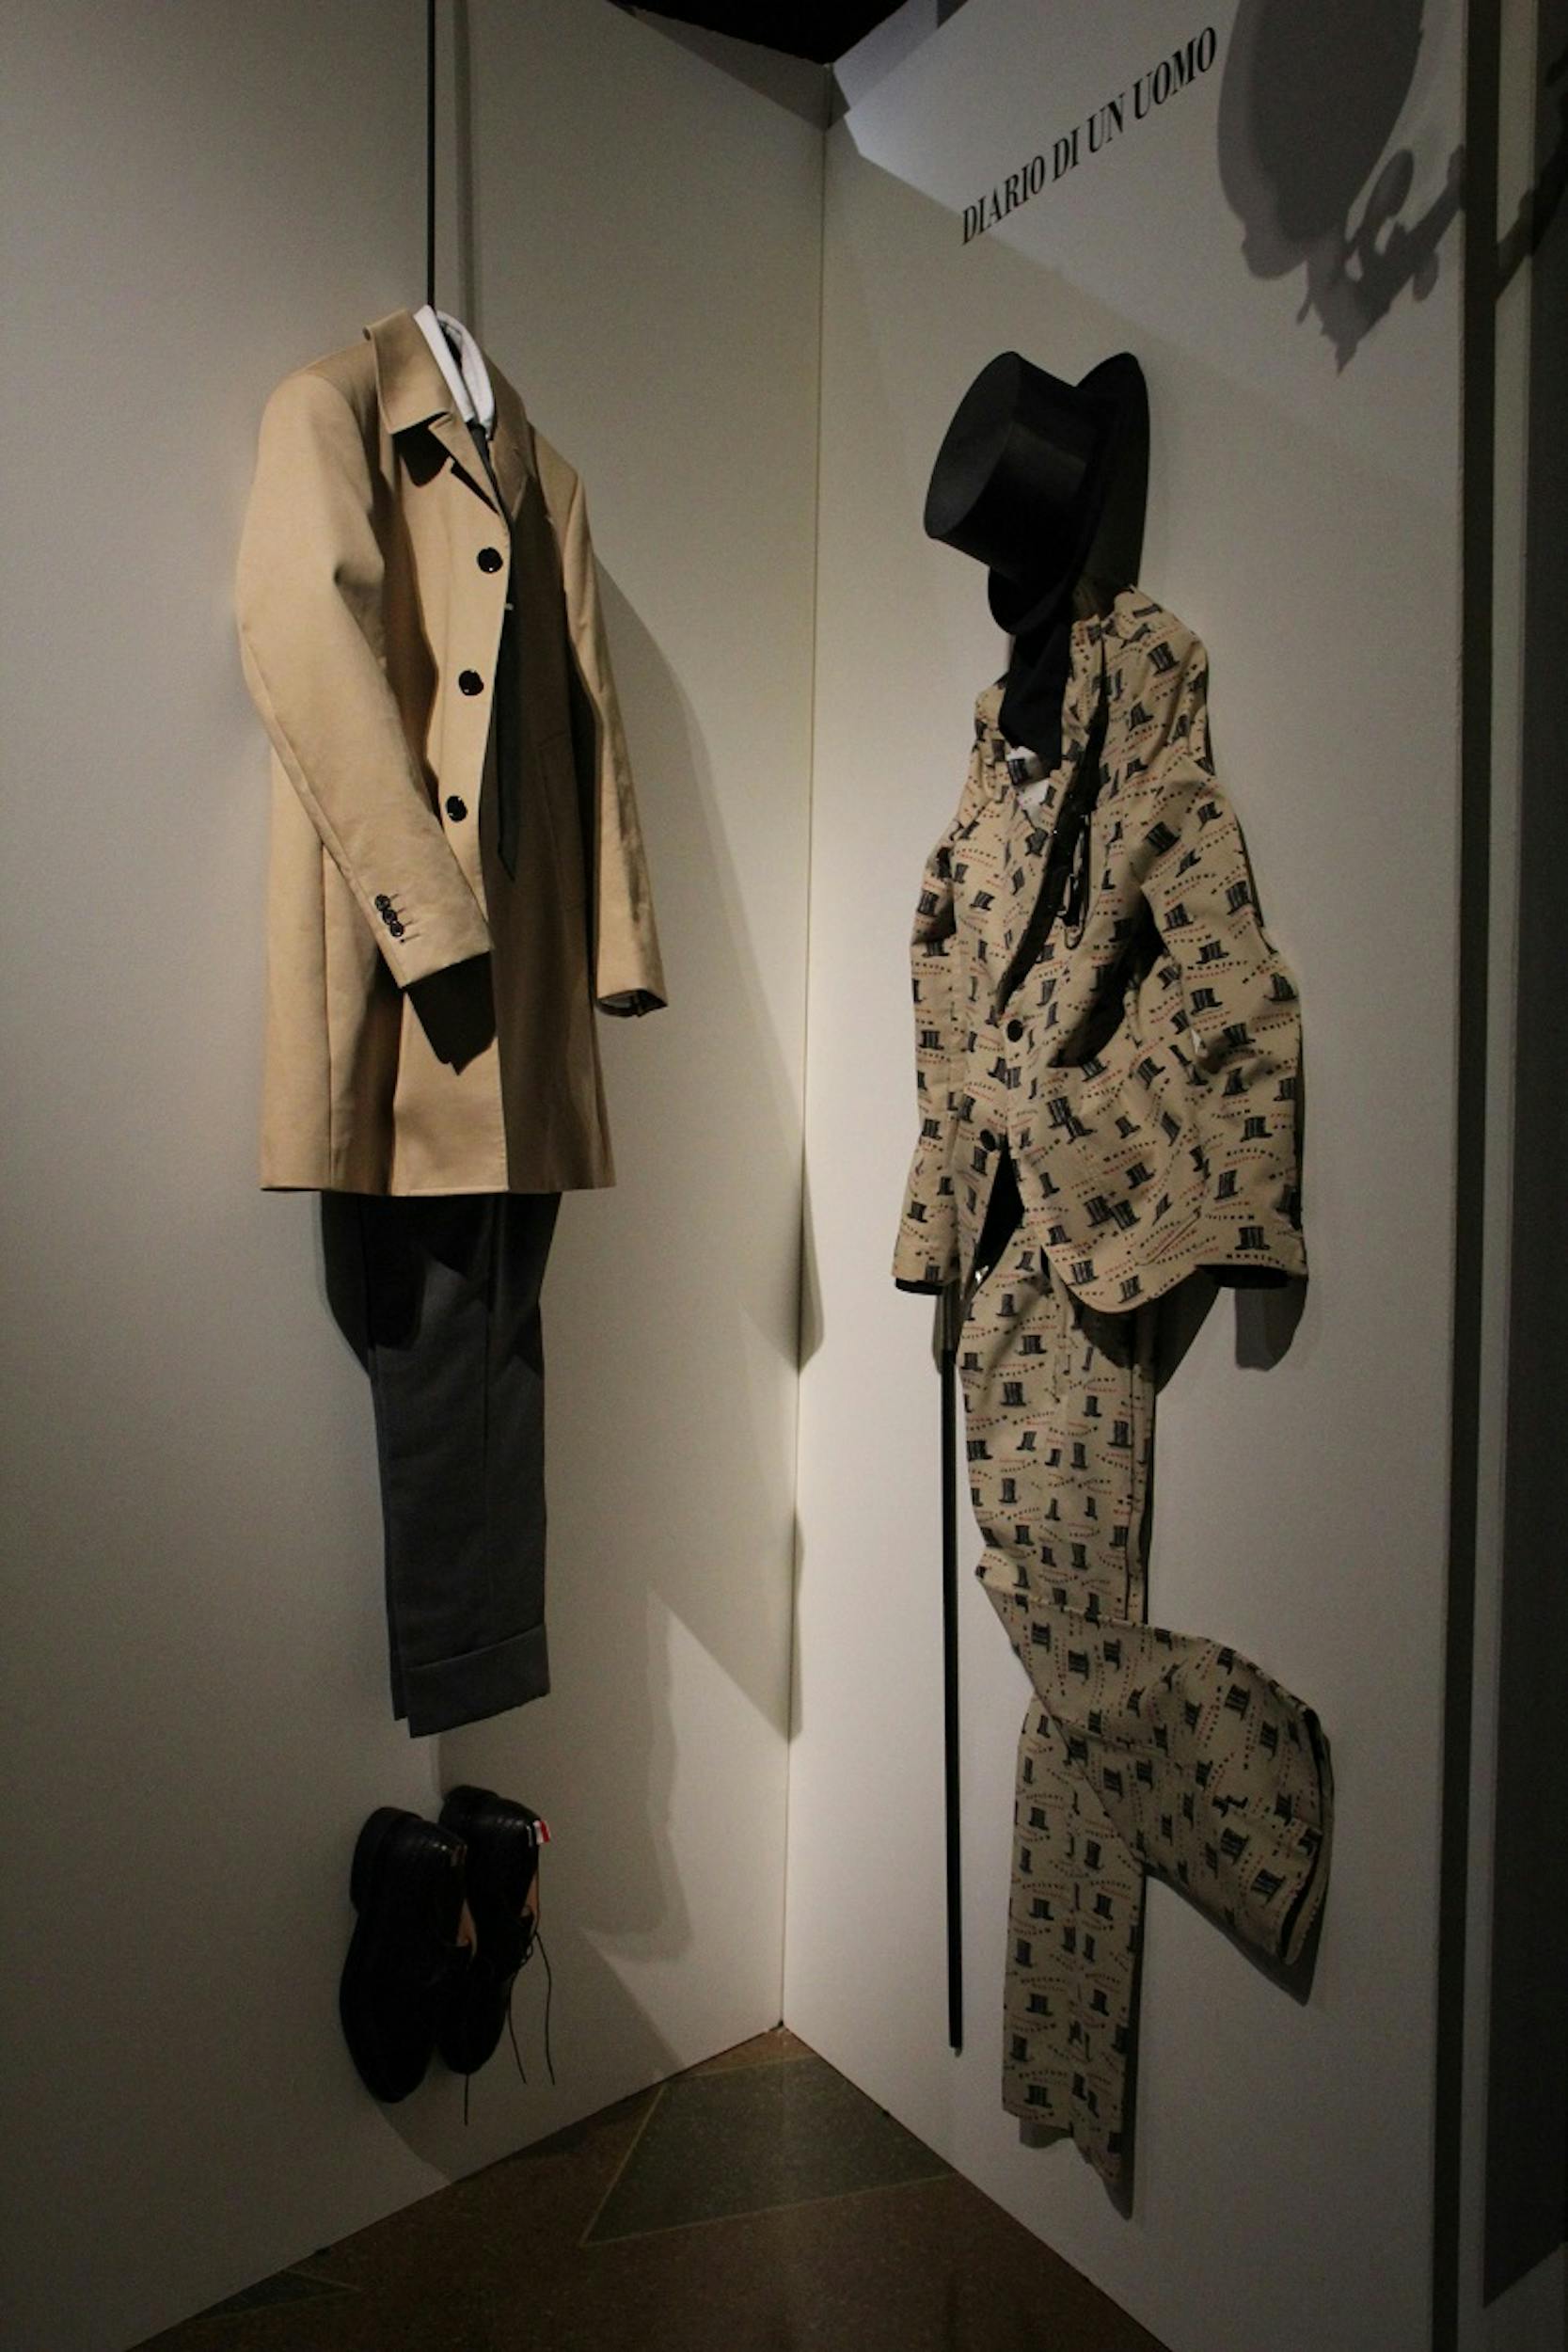 A short novel on men's fashion | Uffizi Galleries